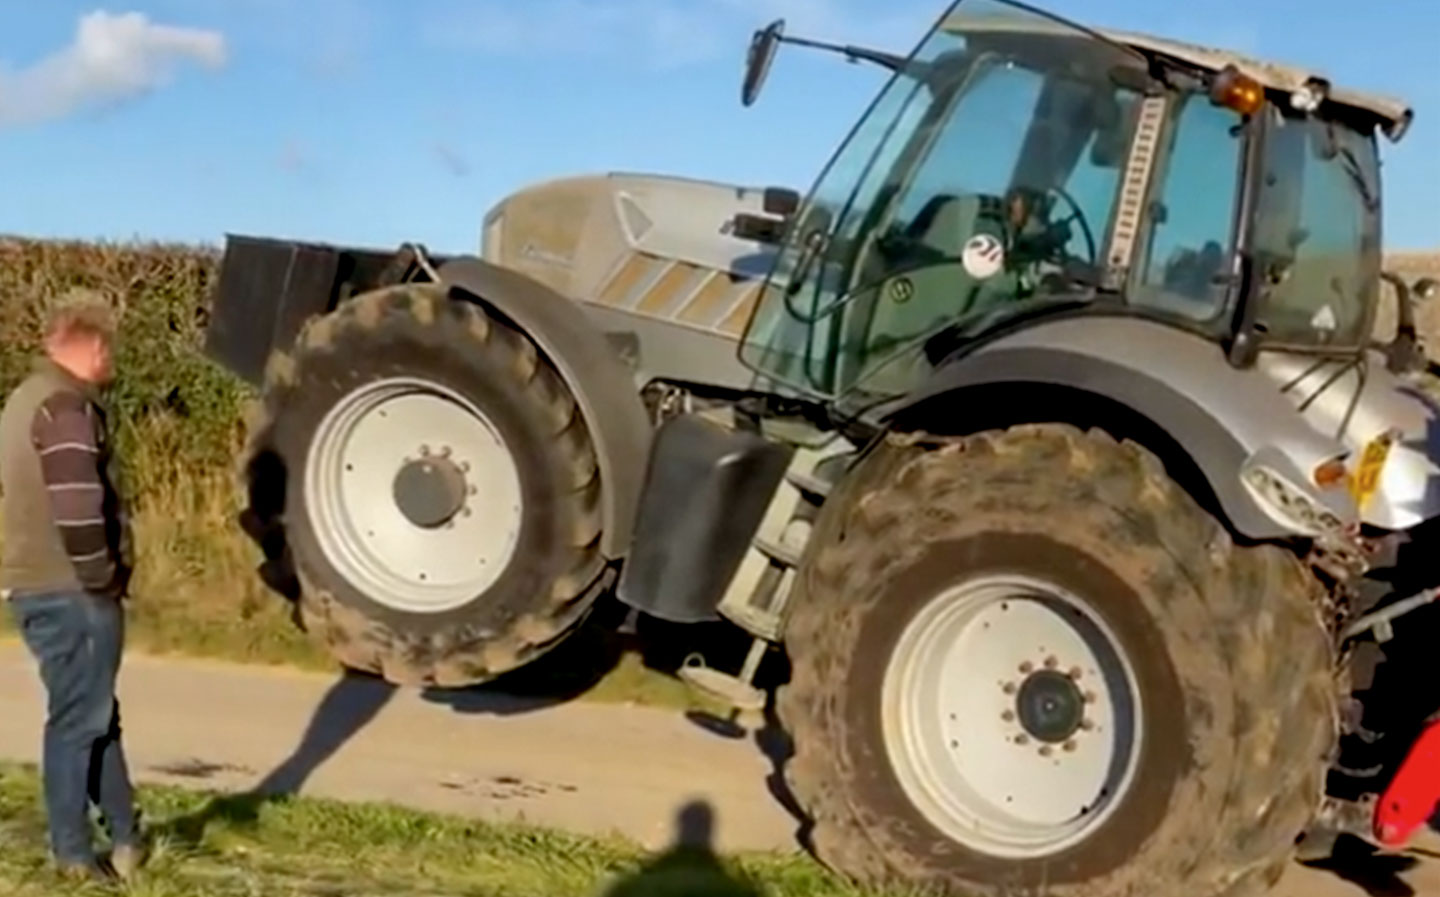 Jeremy Clarkson Lamborghini tractor stuck after Kaleb error